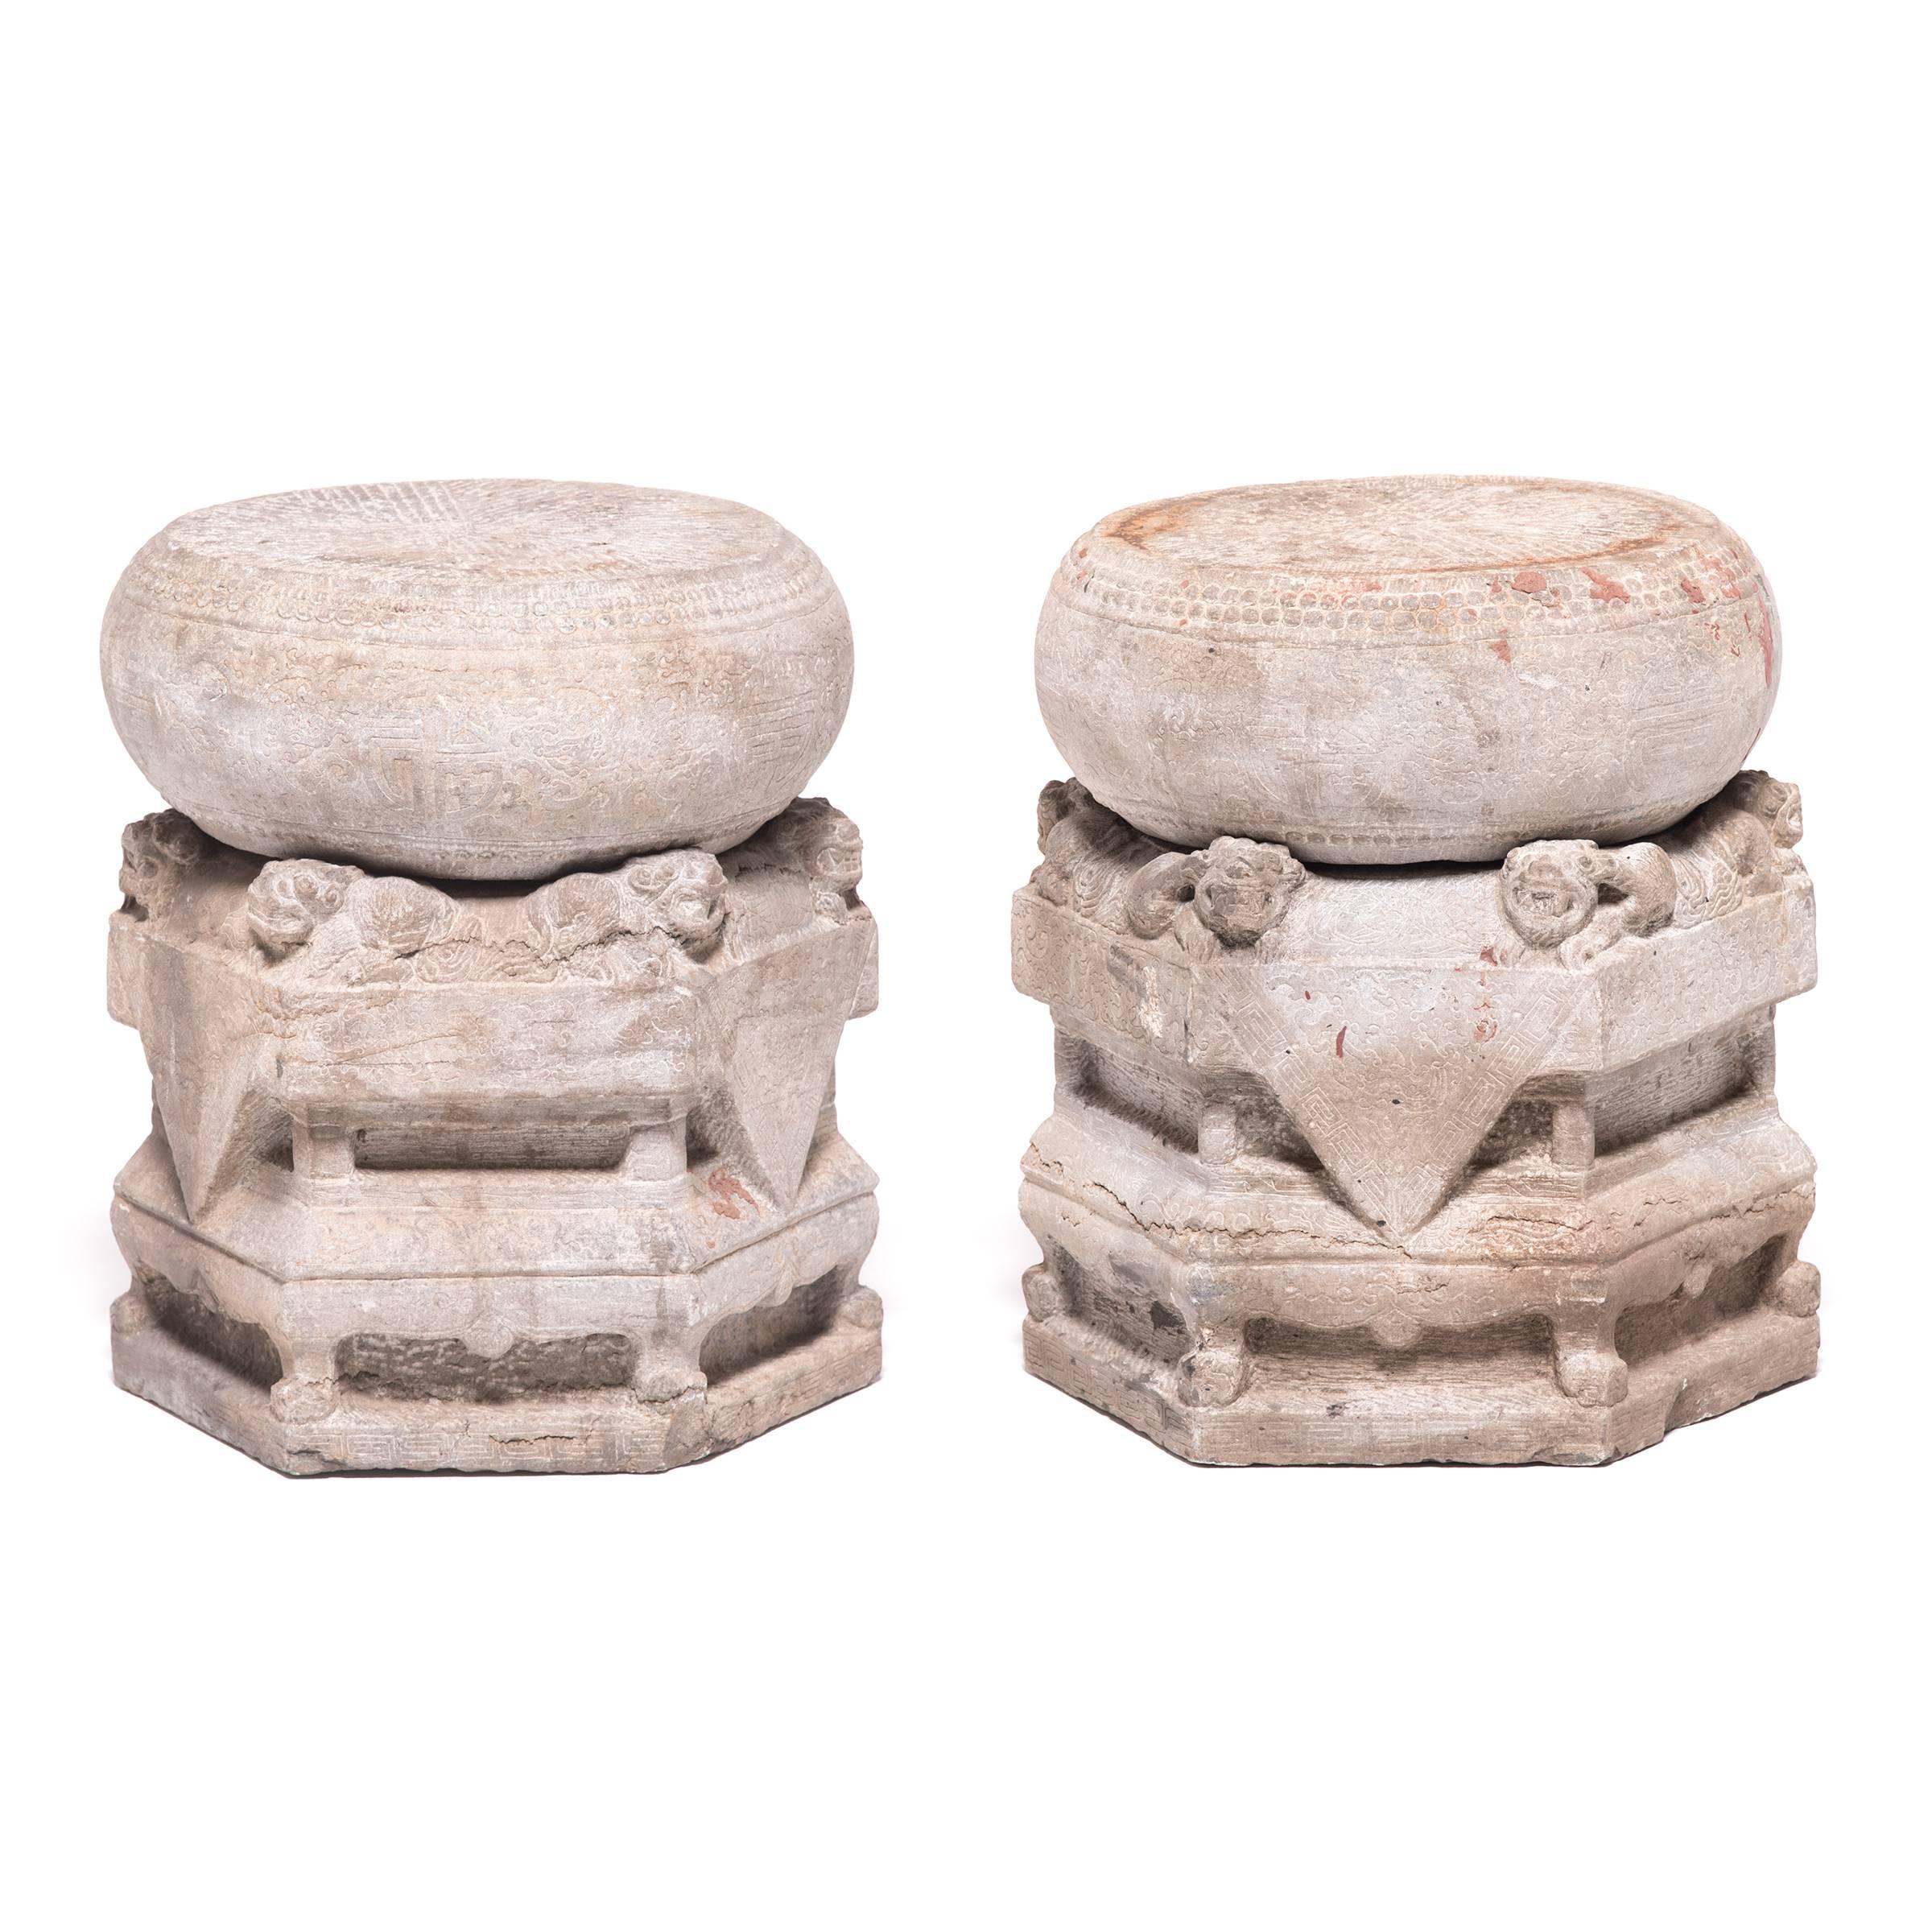 Pair of Chinese Limestone Column Bases, c. 1850